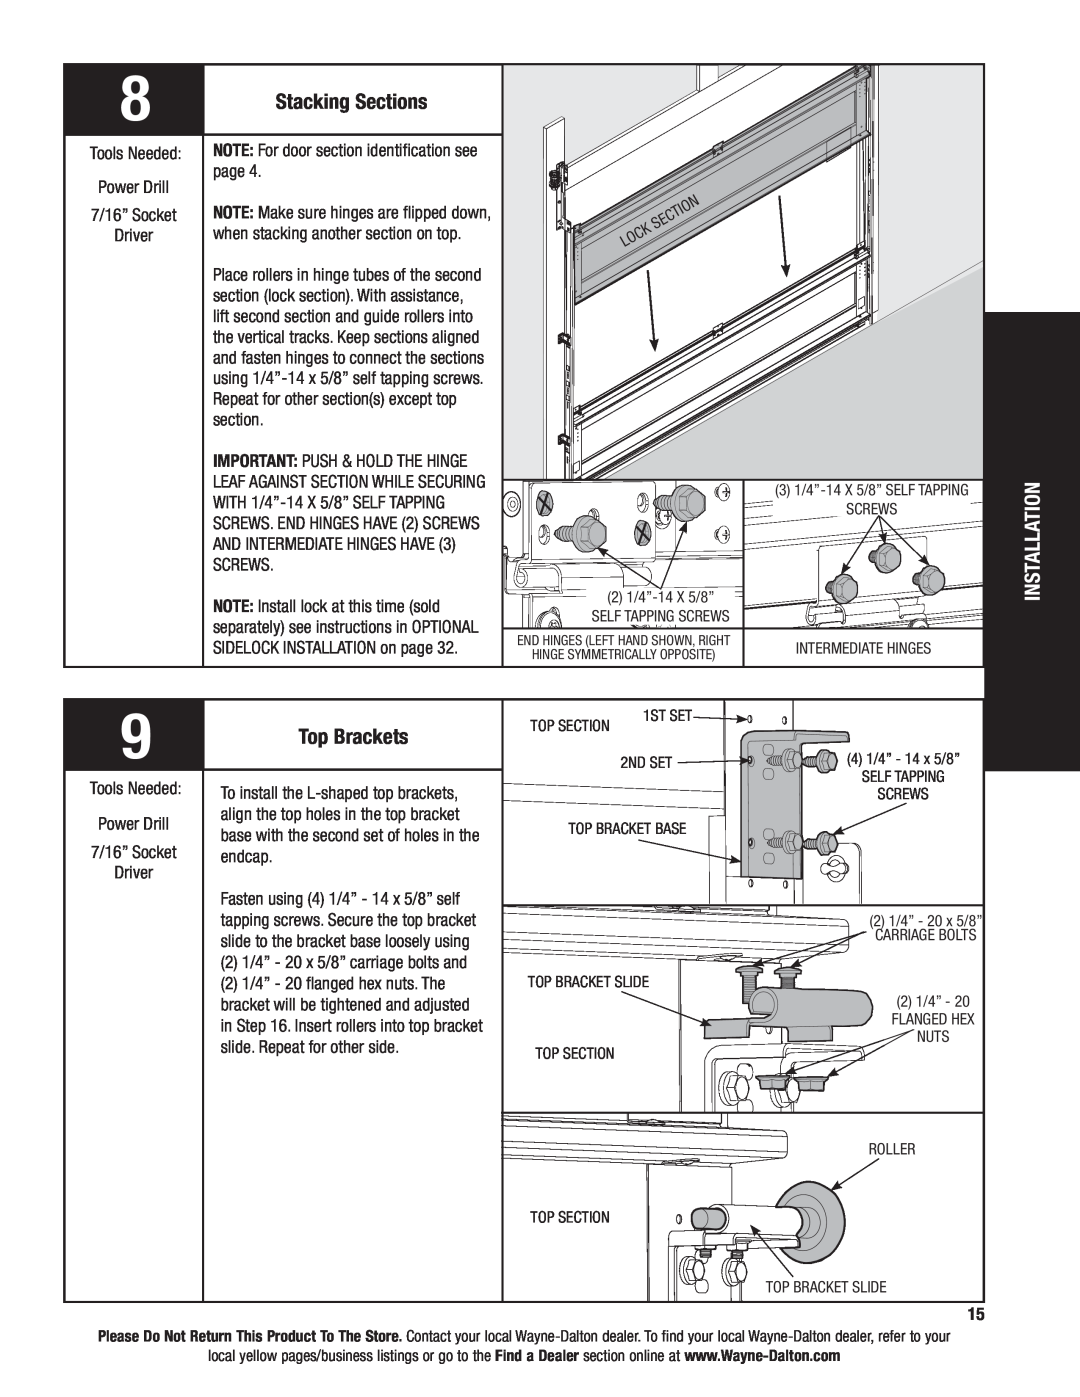 Wayne-Dalton 9600 installation instructions Stacking Sections, Top Brackets 